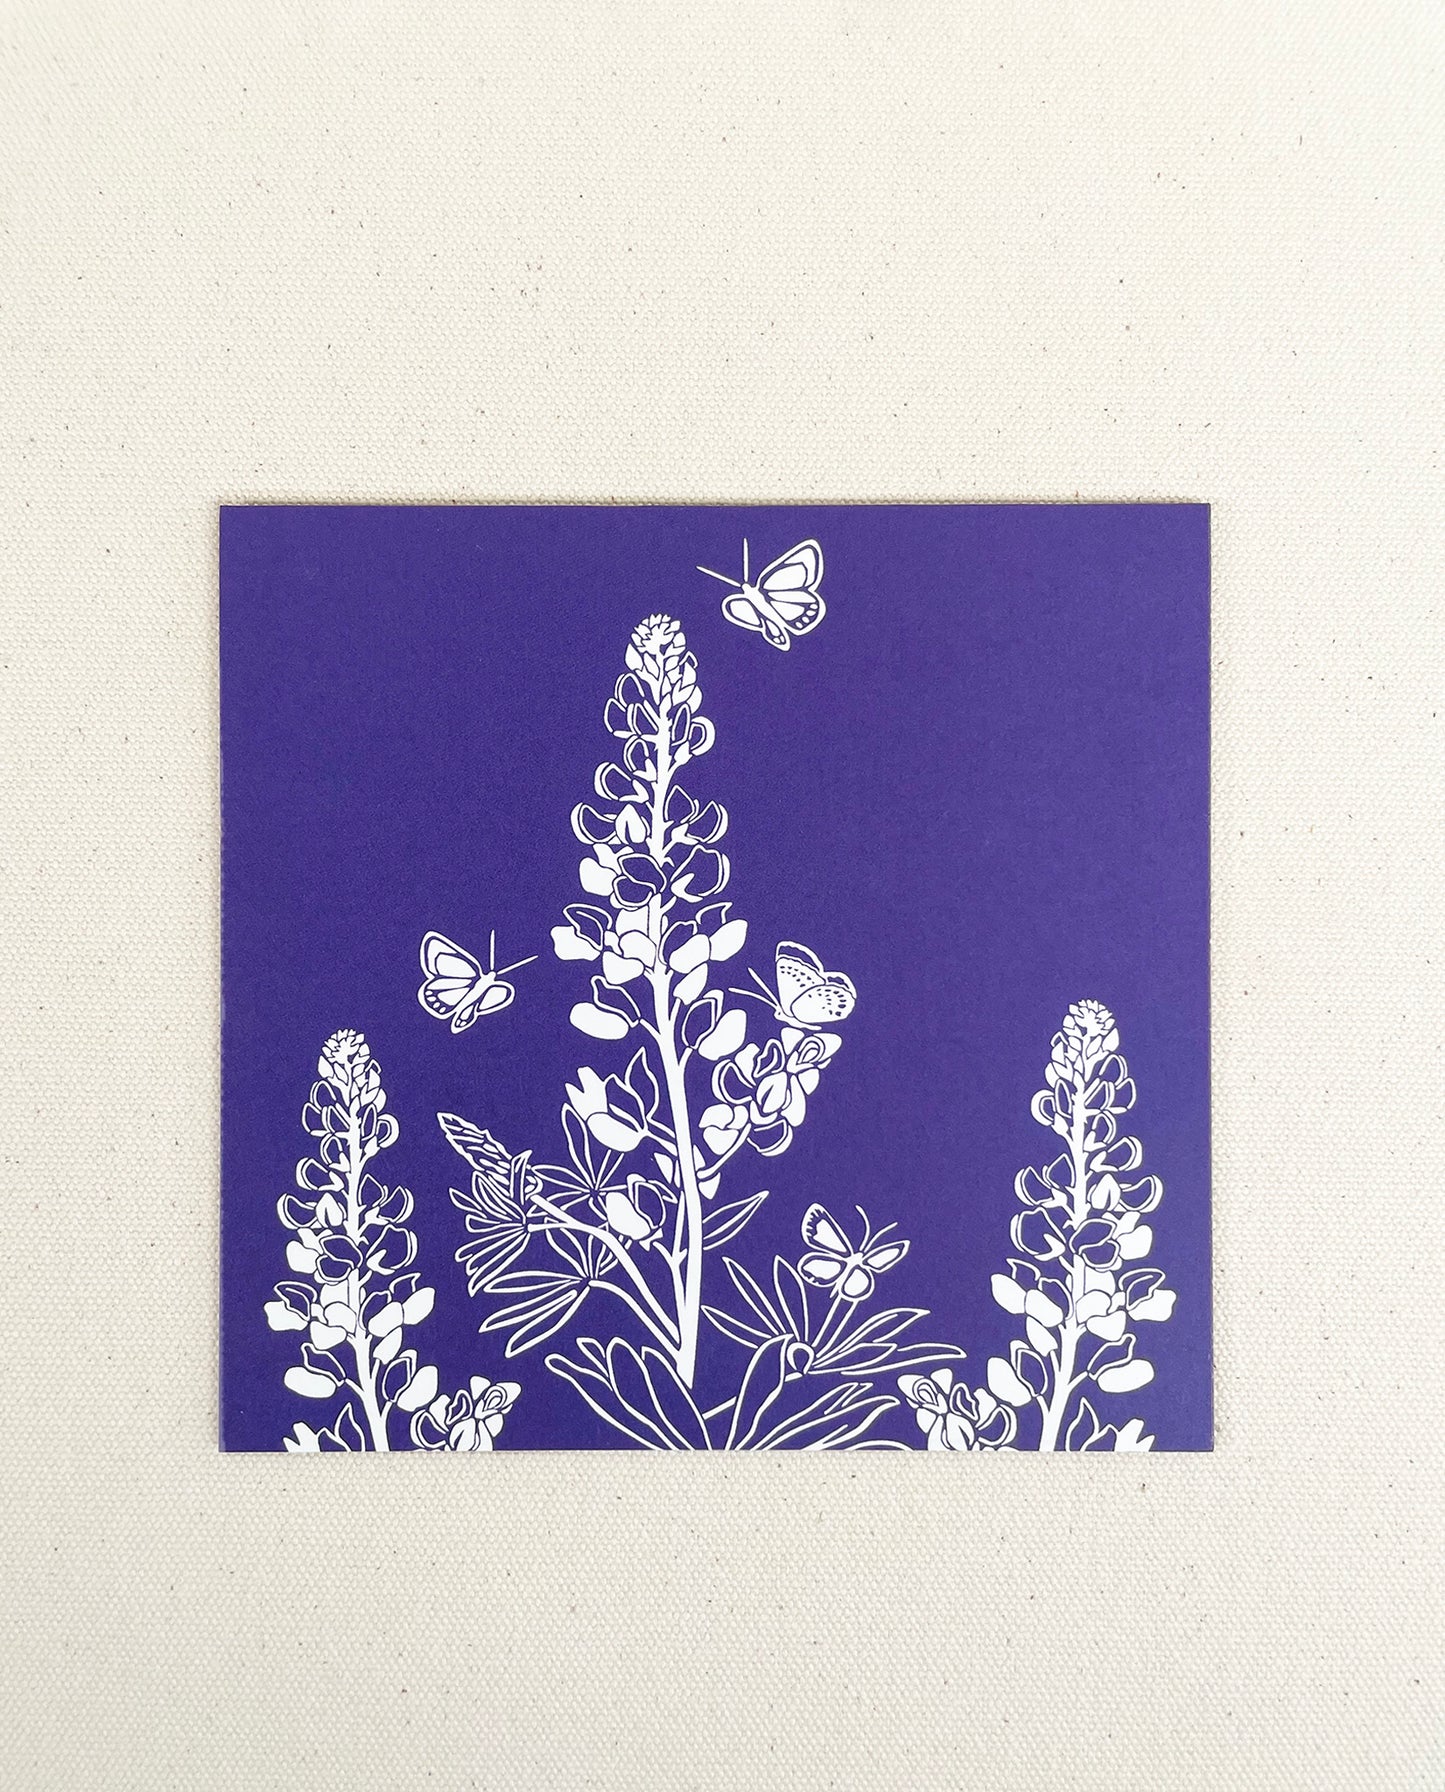 Lupine note card with purple background. Original art by Natalija Walbridge Dock 5